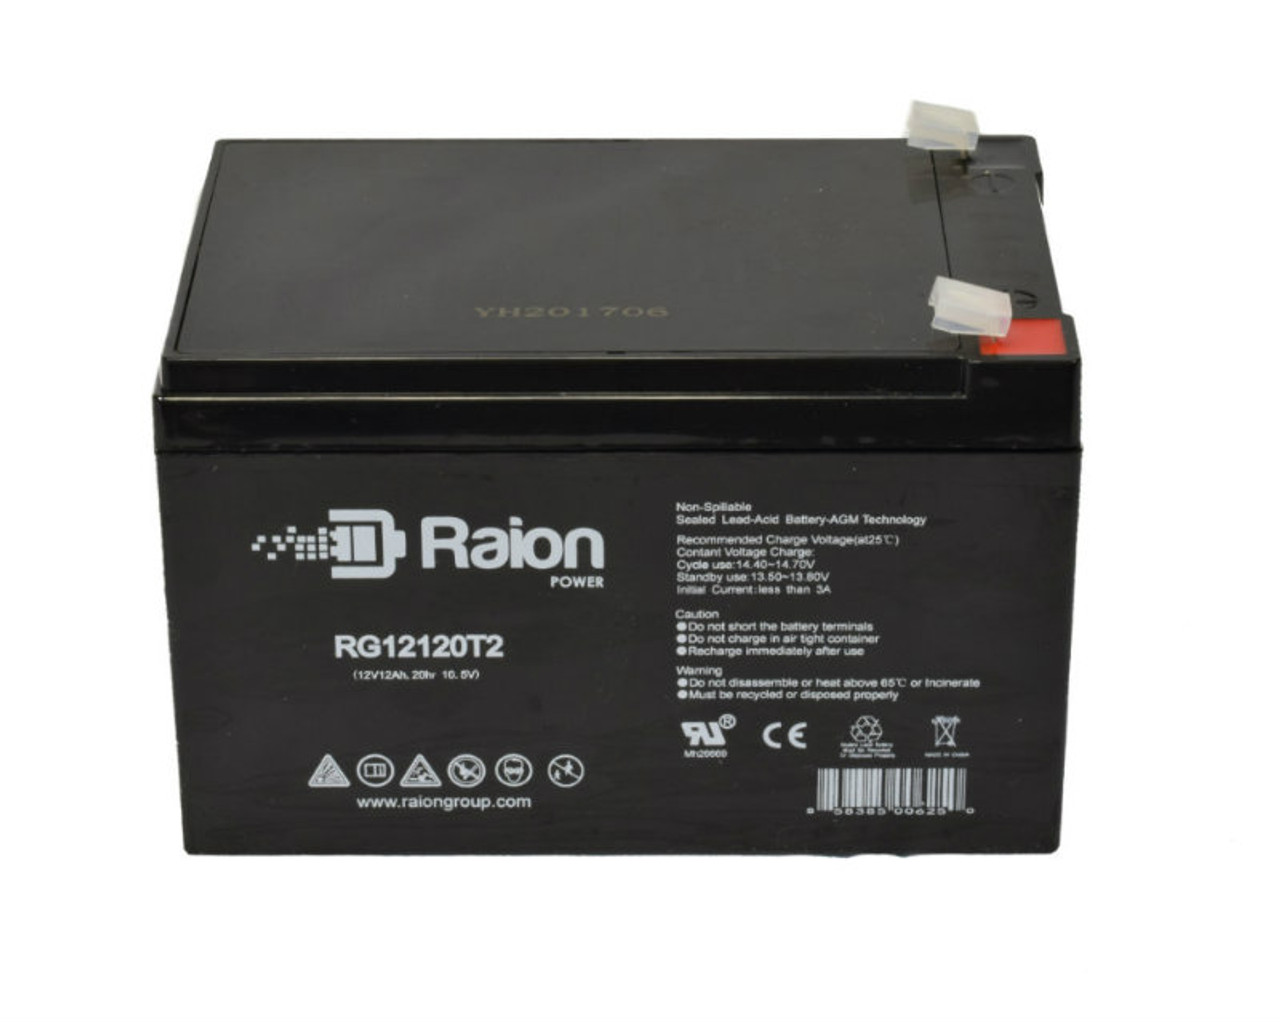 Raion Power RG12120T2 SLA Battery for Upsonic IH 10000